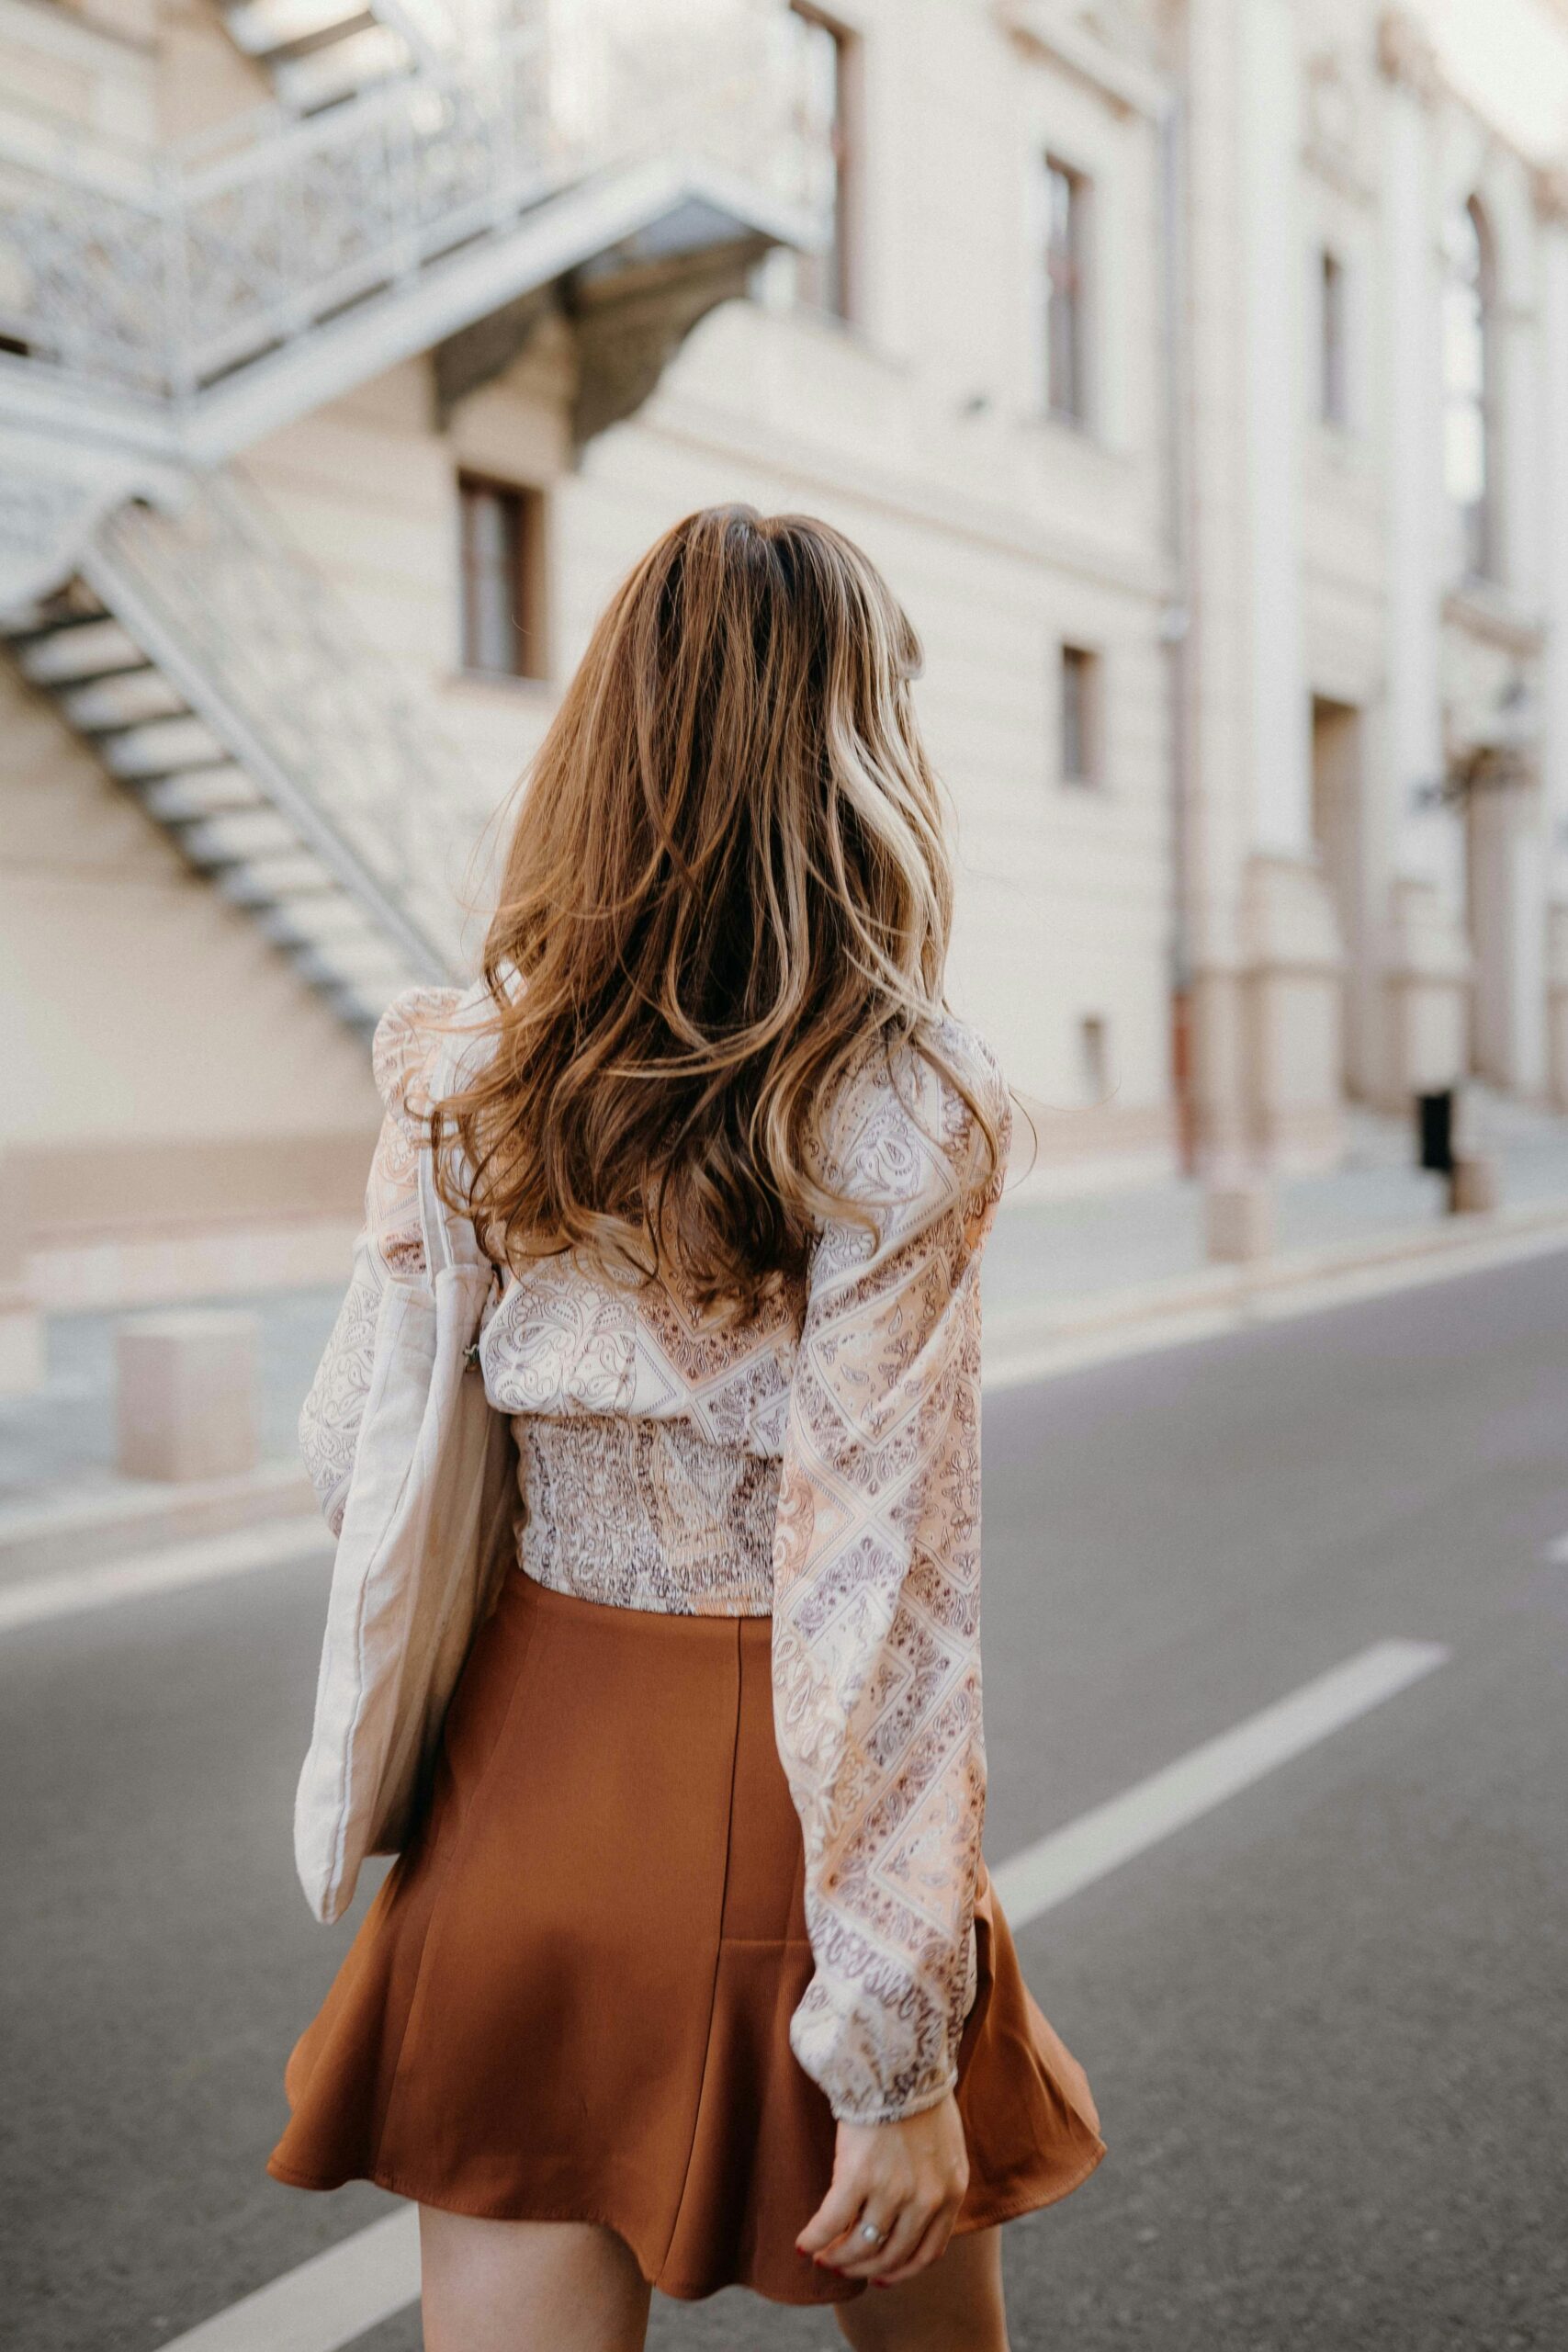 Woman wearing brown skirt and white blouse carrying laptop walking down street.